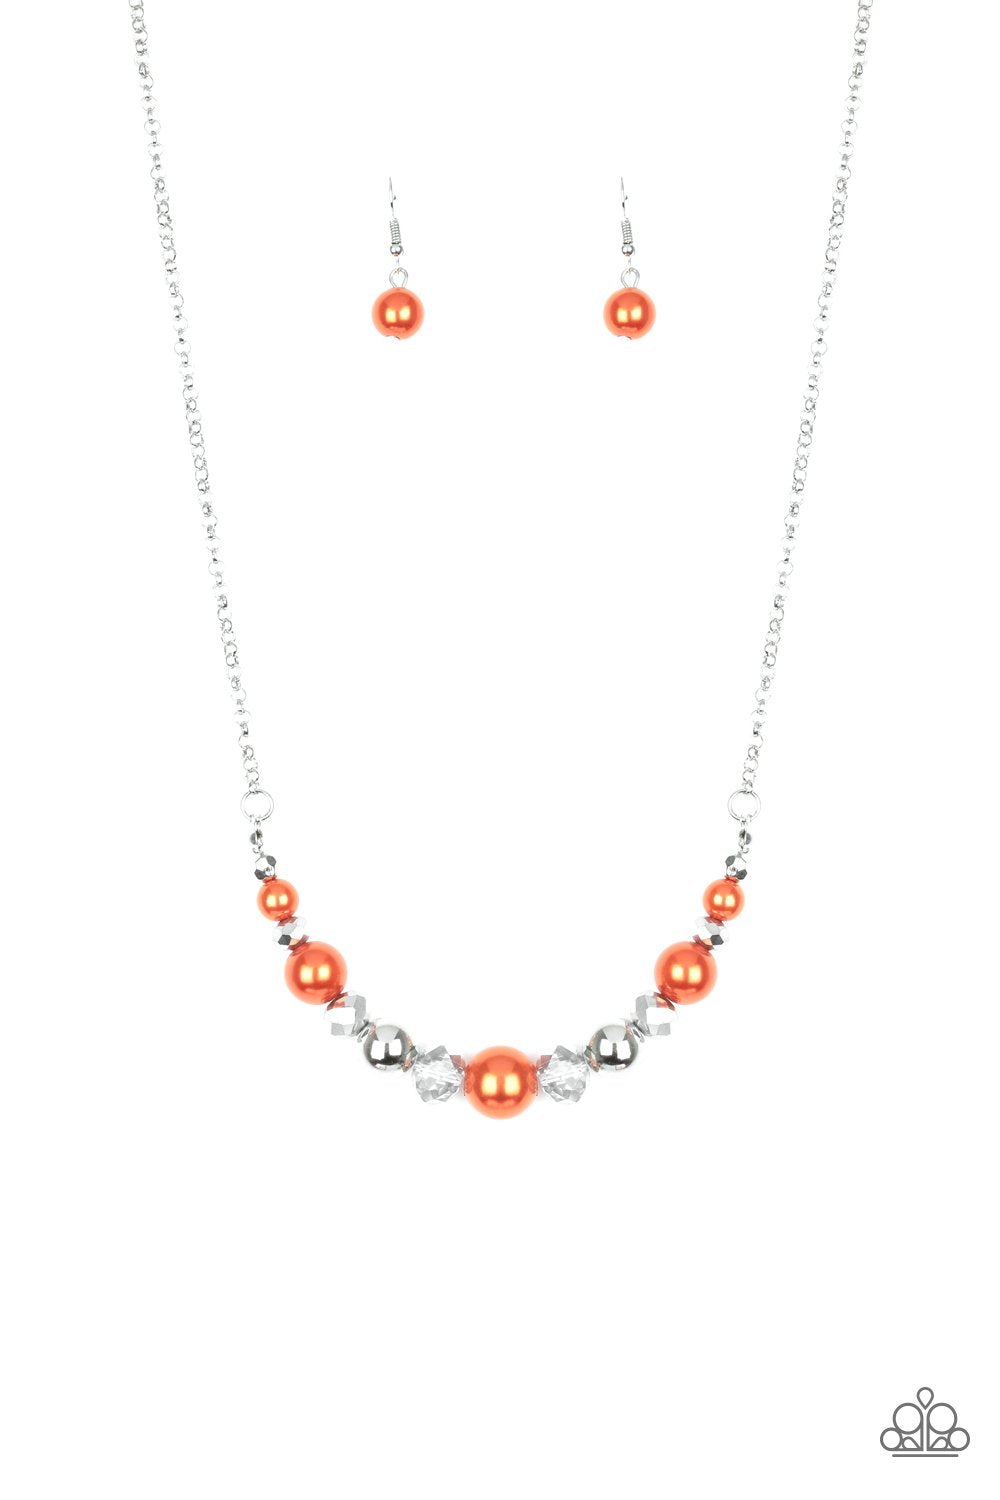 The Big-Leaguer - Orange Necklace freeshipping - JewLz4u Gemstone Gallery